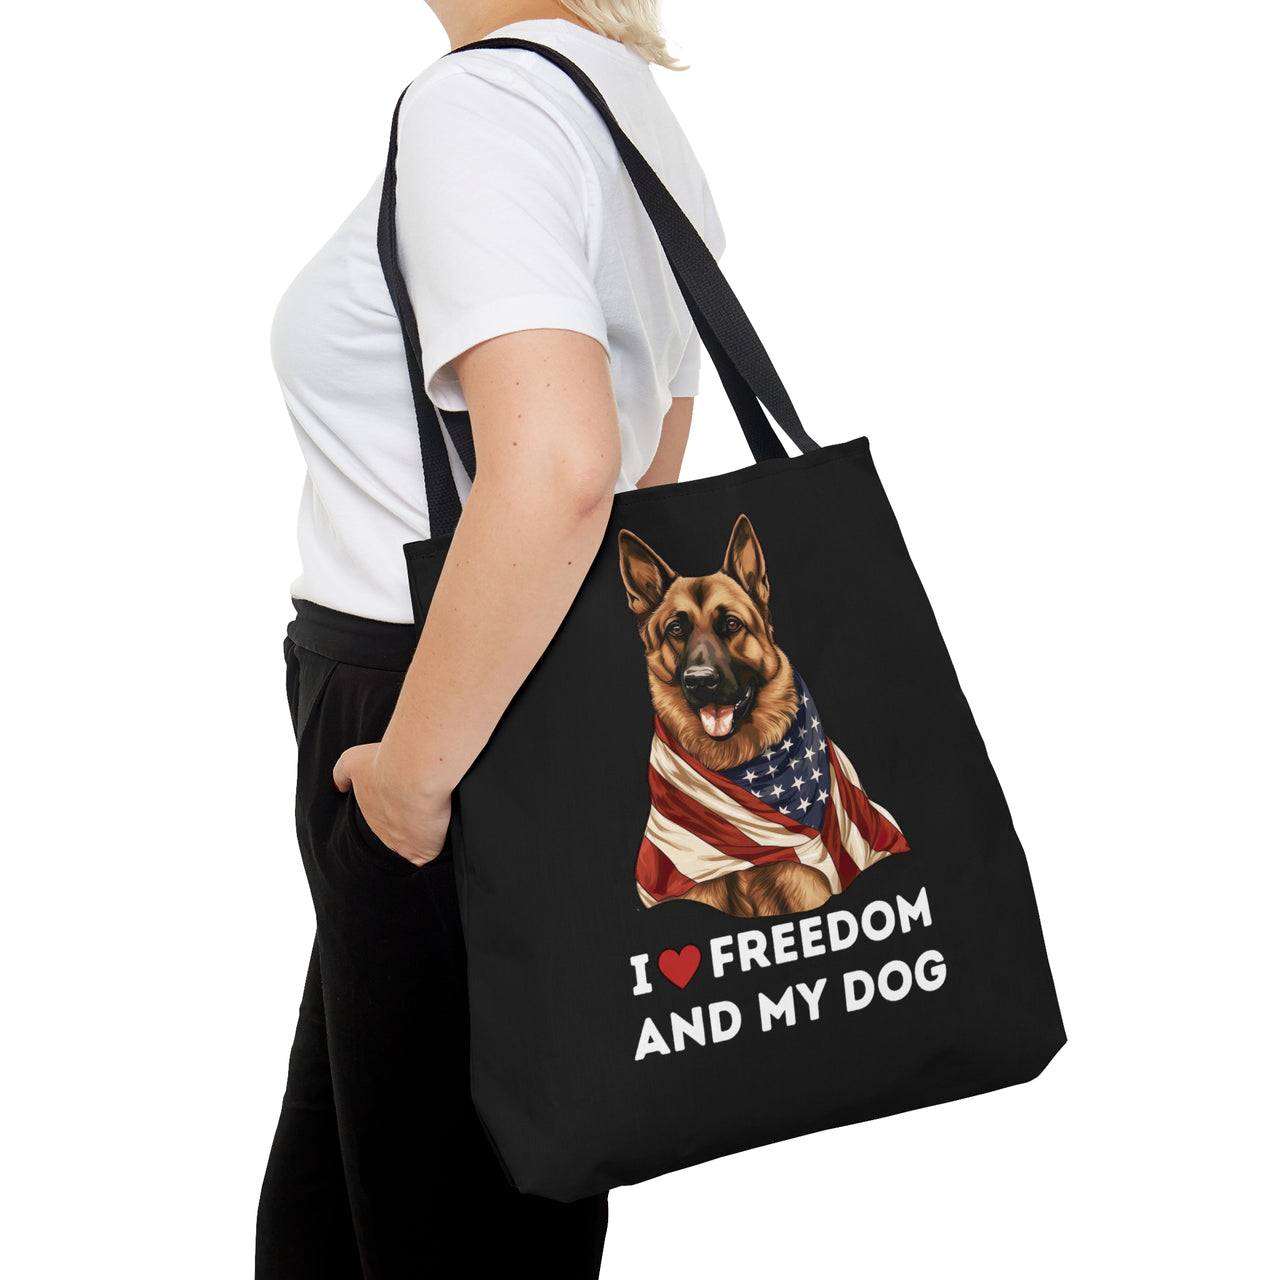 I Love Freedom and My Dog Tote Bag